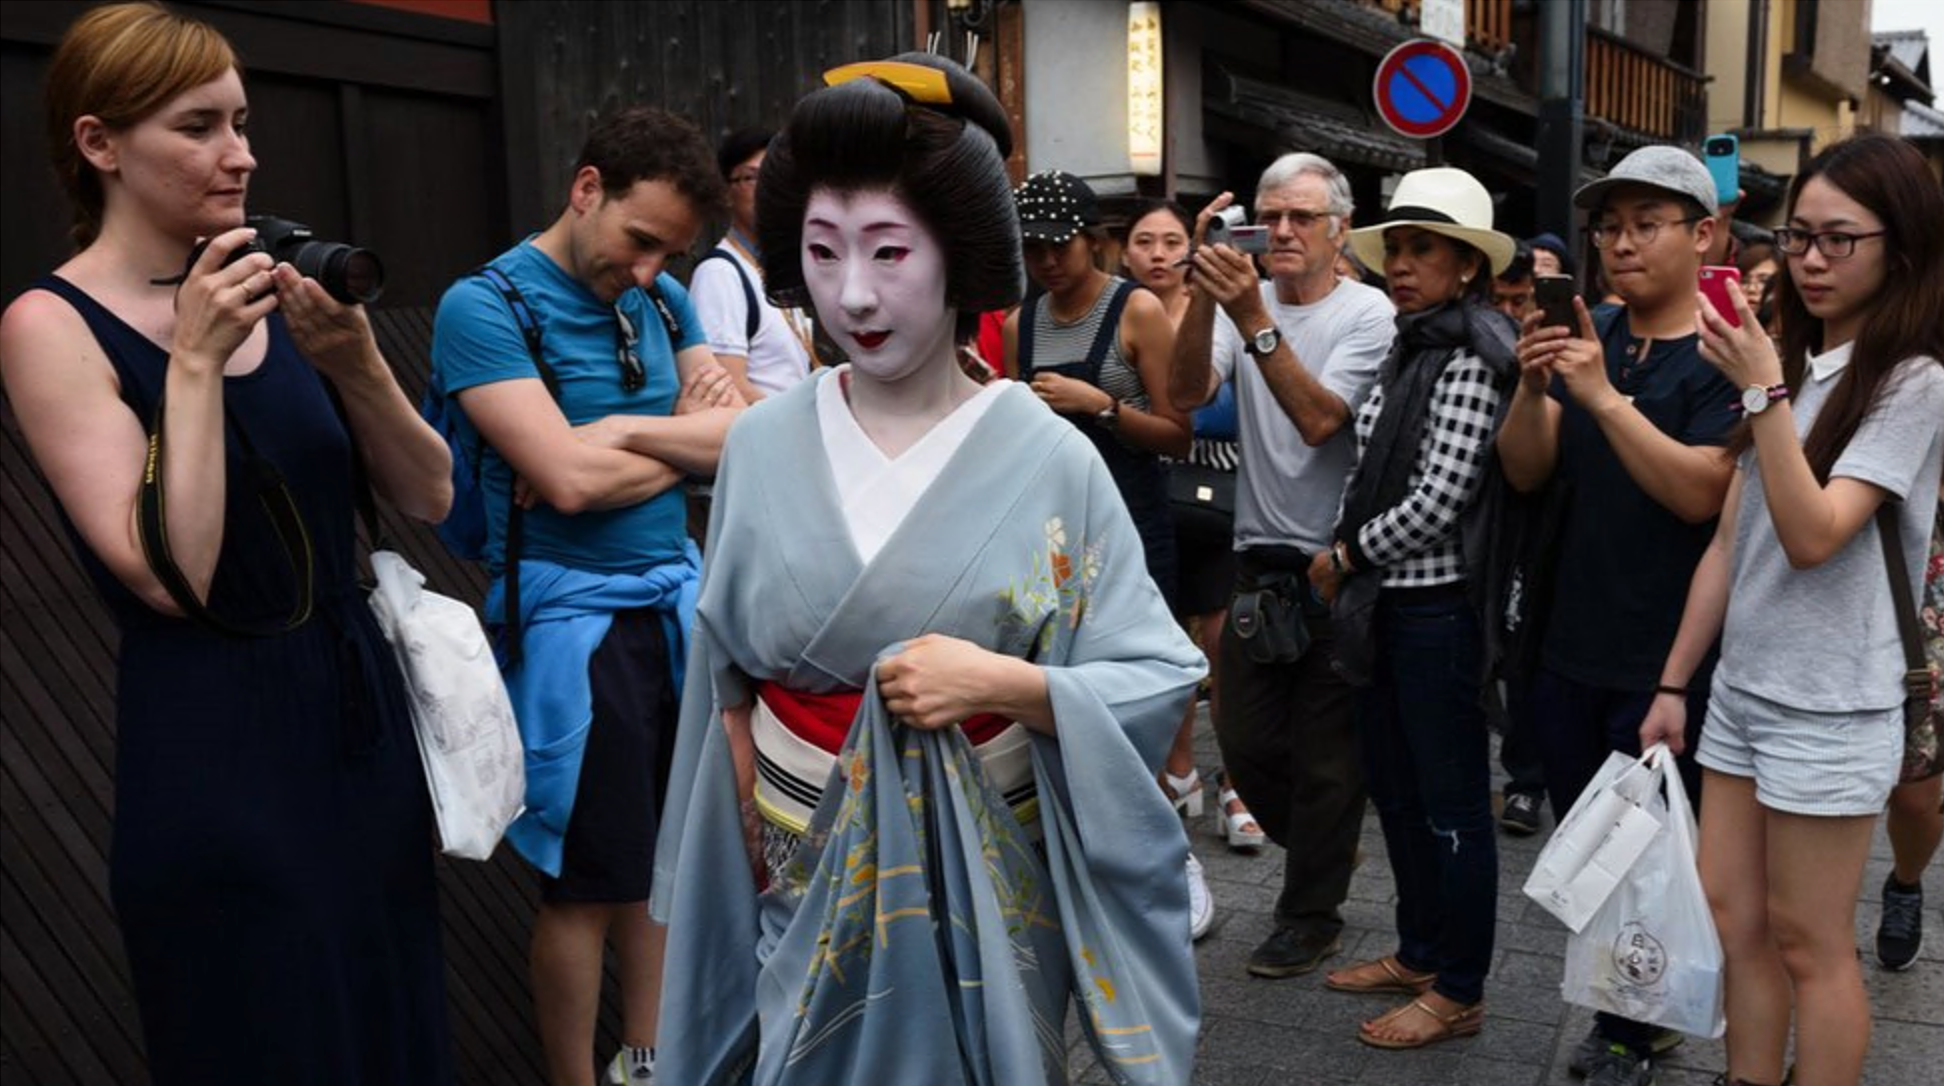 Tourists take photographs of a geiko walking through the Gion area of Kyoto, Japan, on Thursday, May 28, 2015.